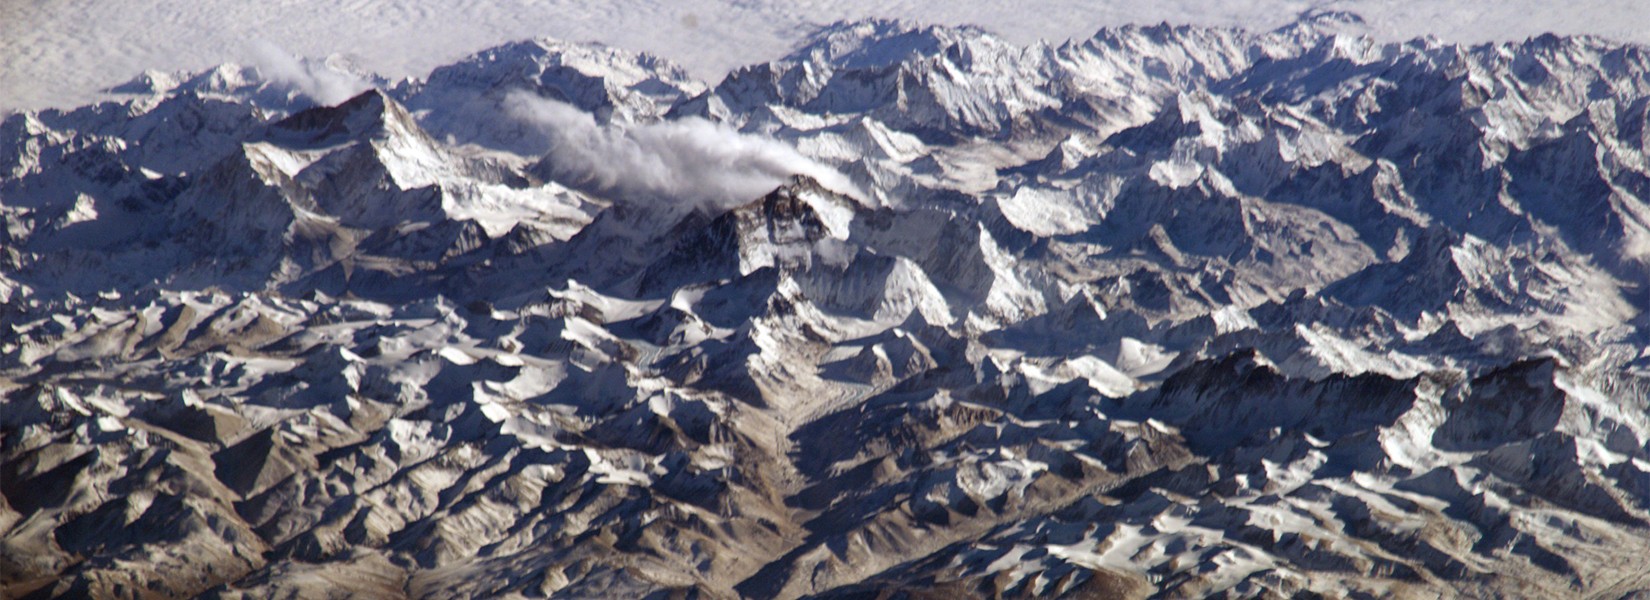 Mount Everest flight Nepal